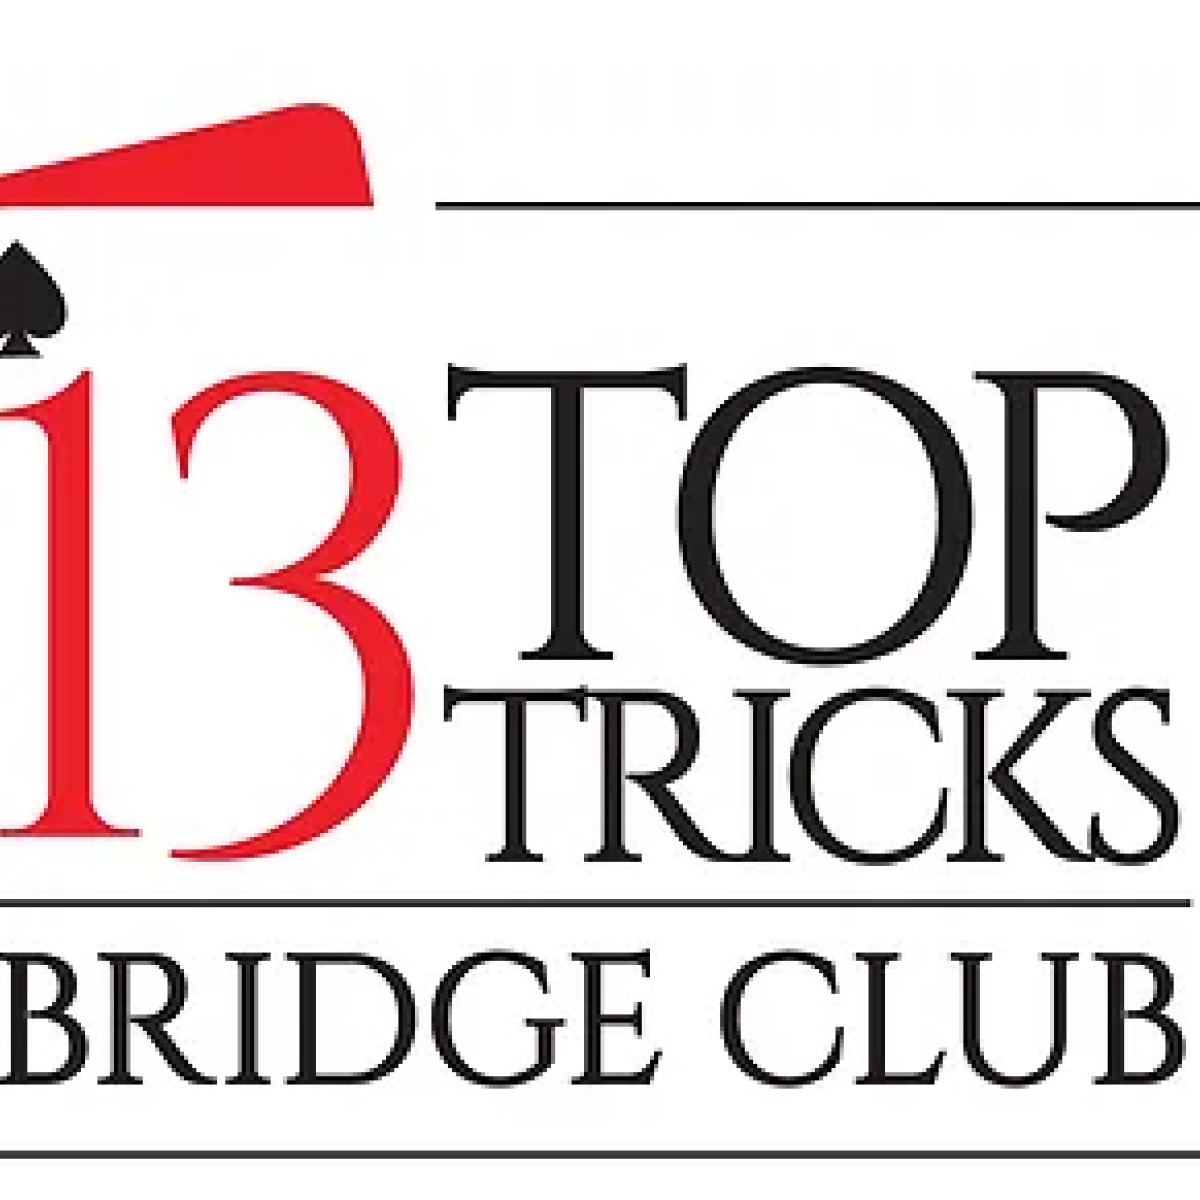 13 Tricks Bridge Club - "Thinking Bridge" Intermediate Course